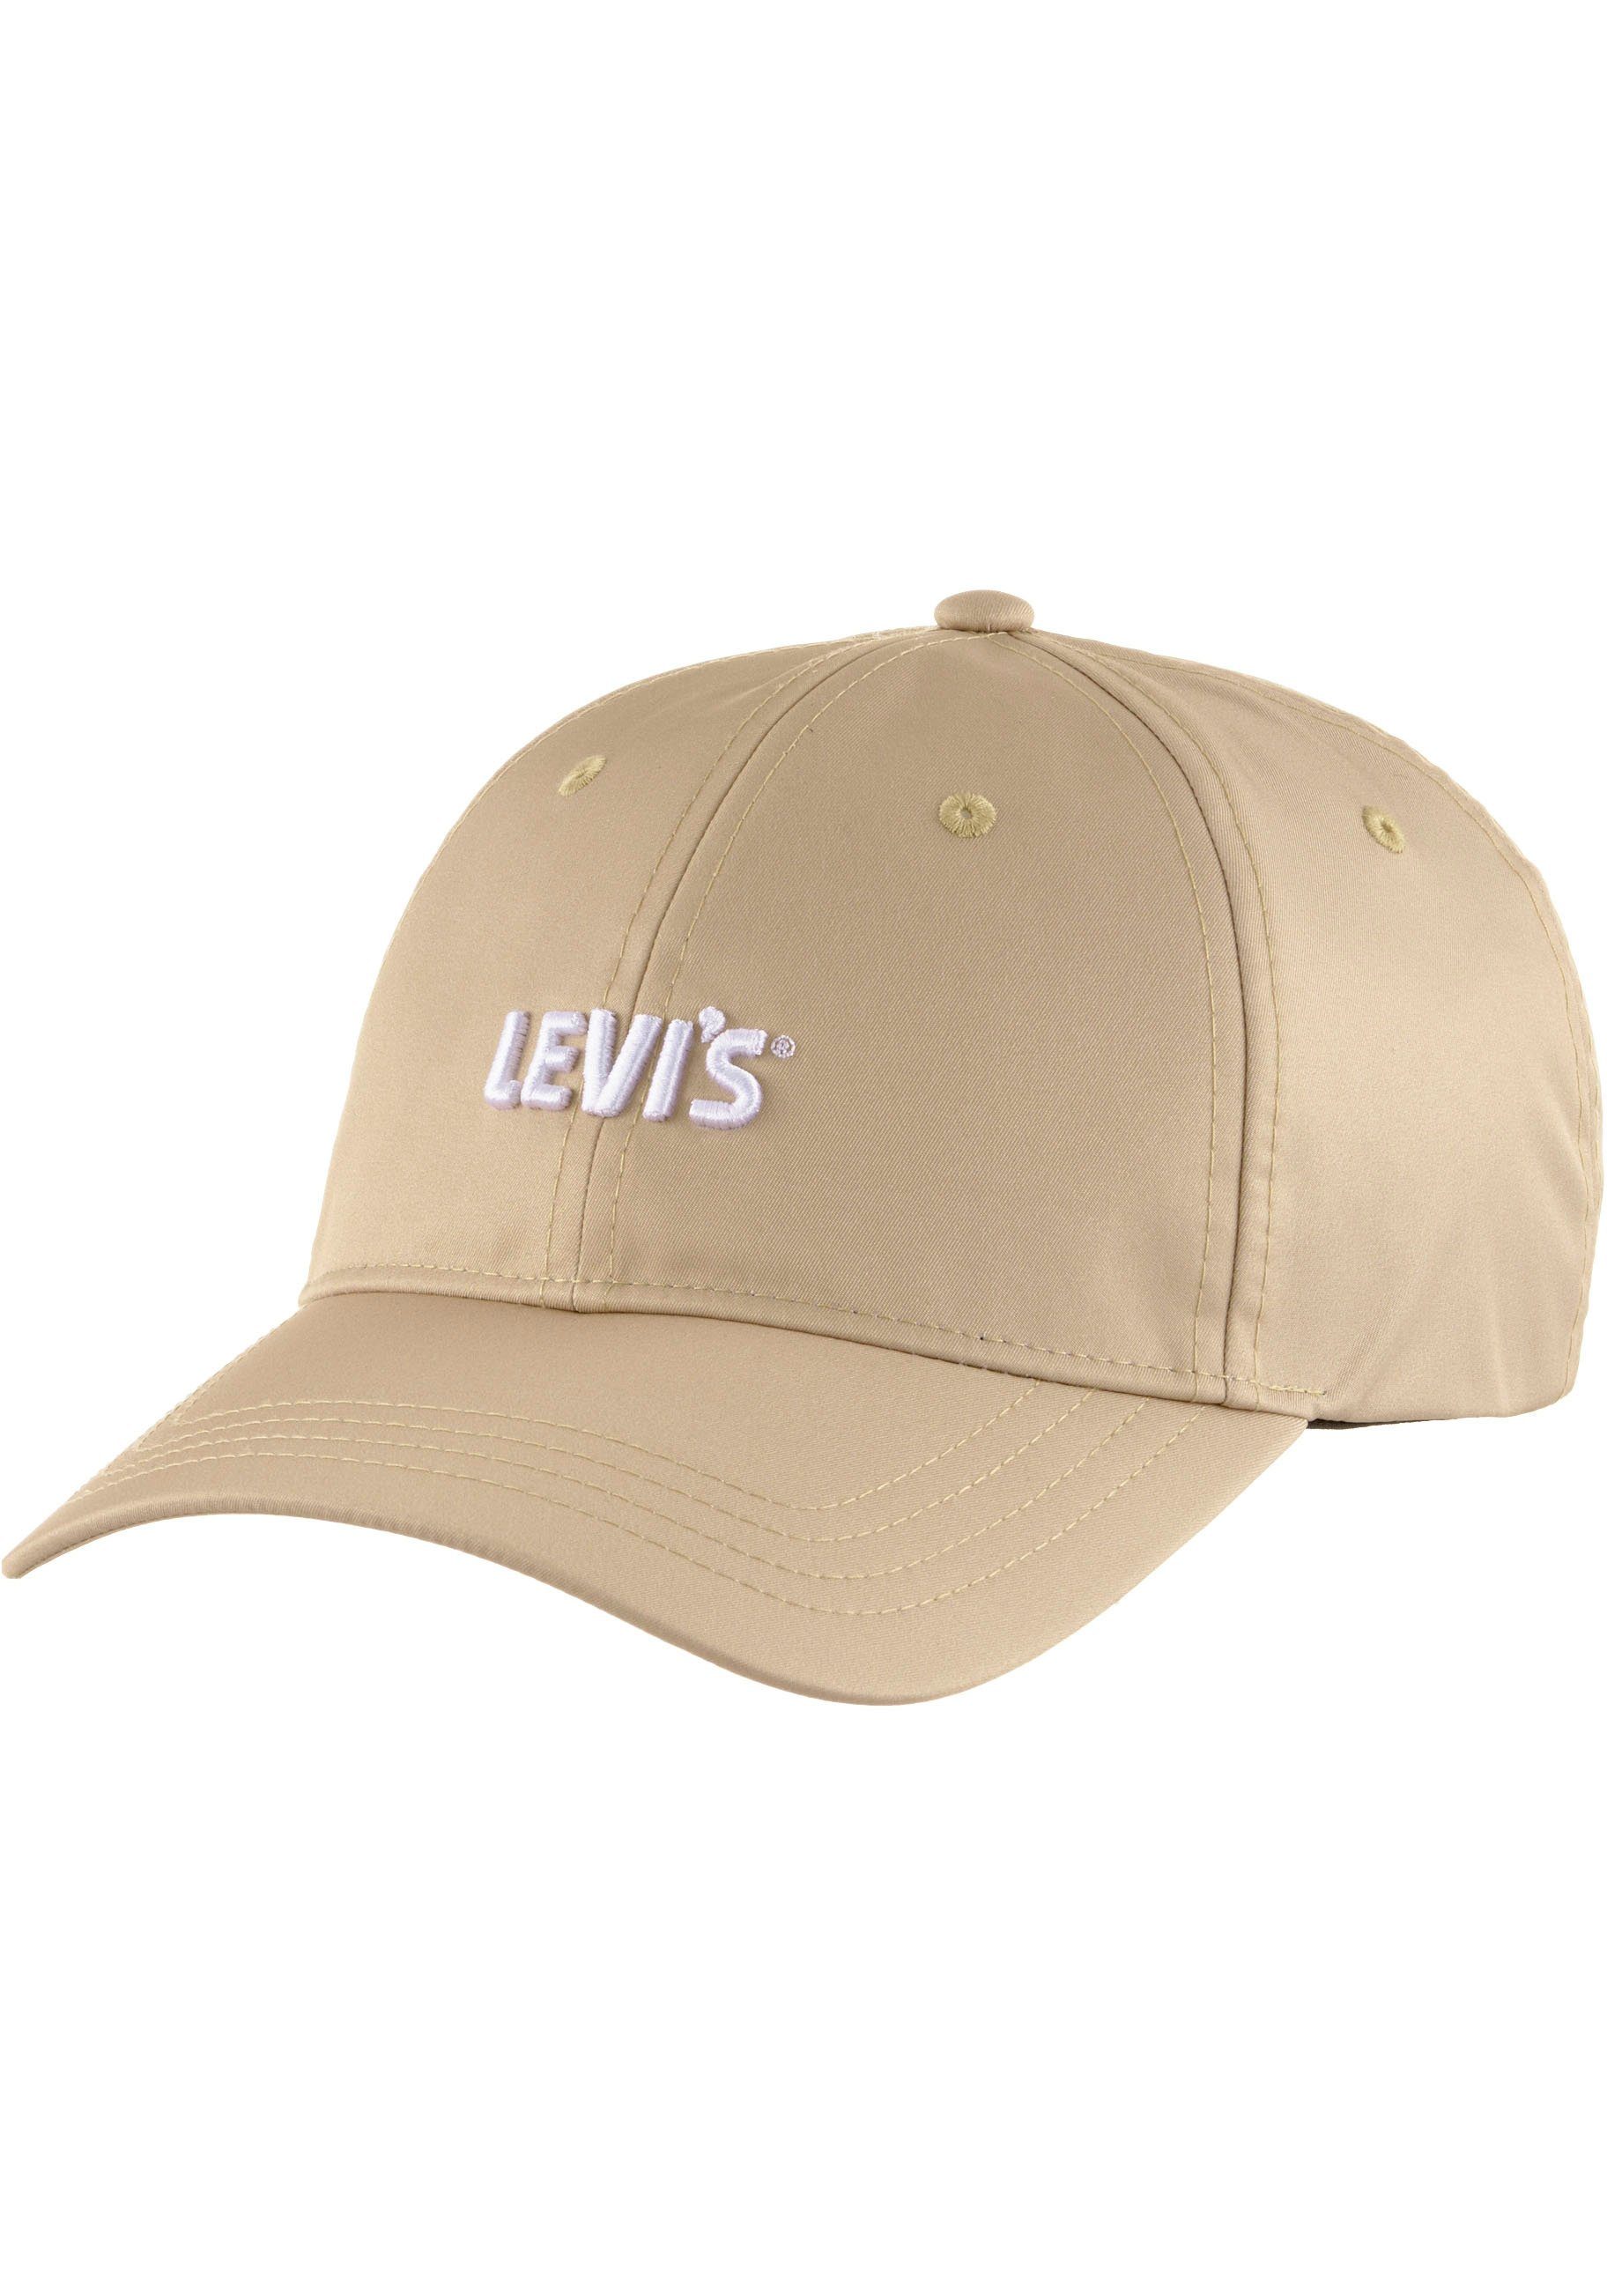 Cap Baseball Levi's® Gold Tab natural tan